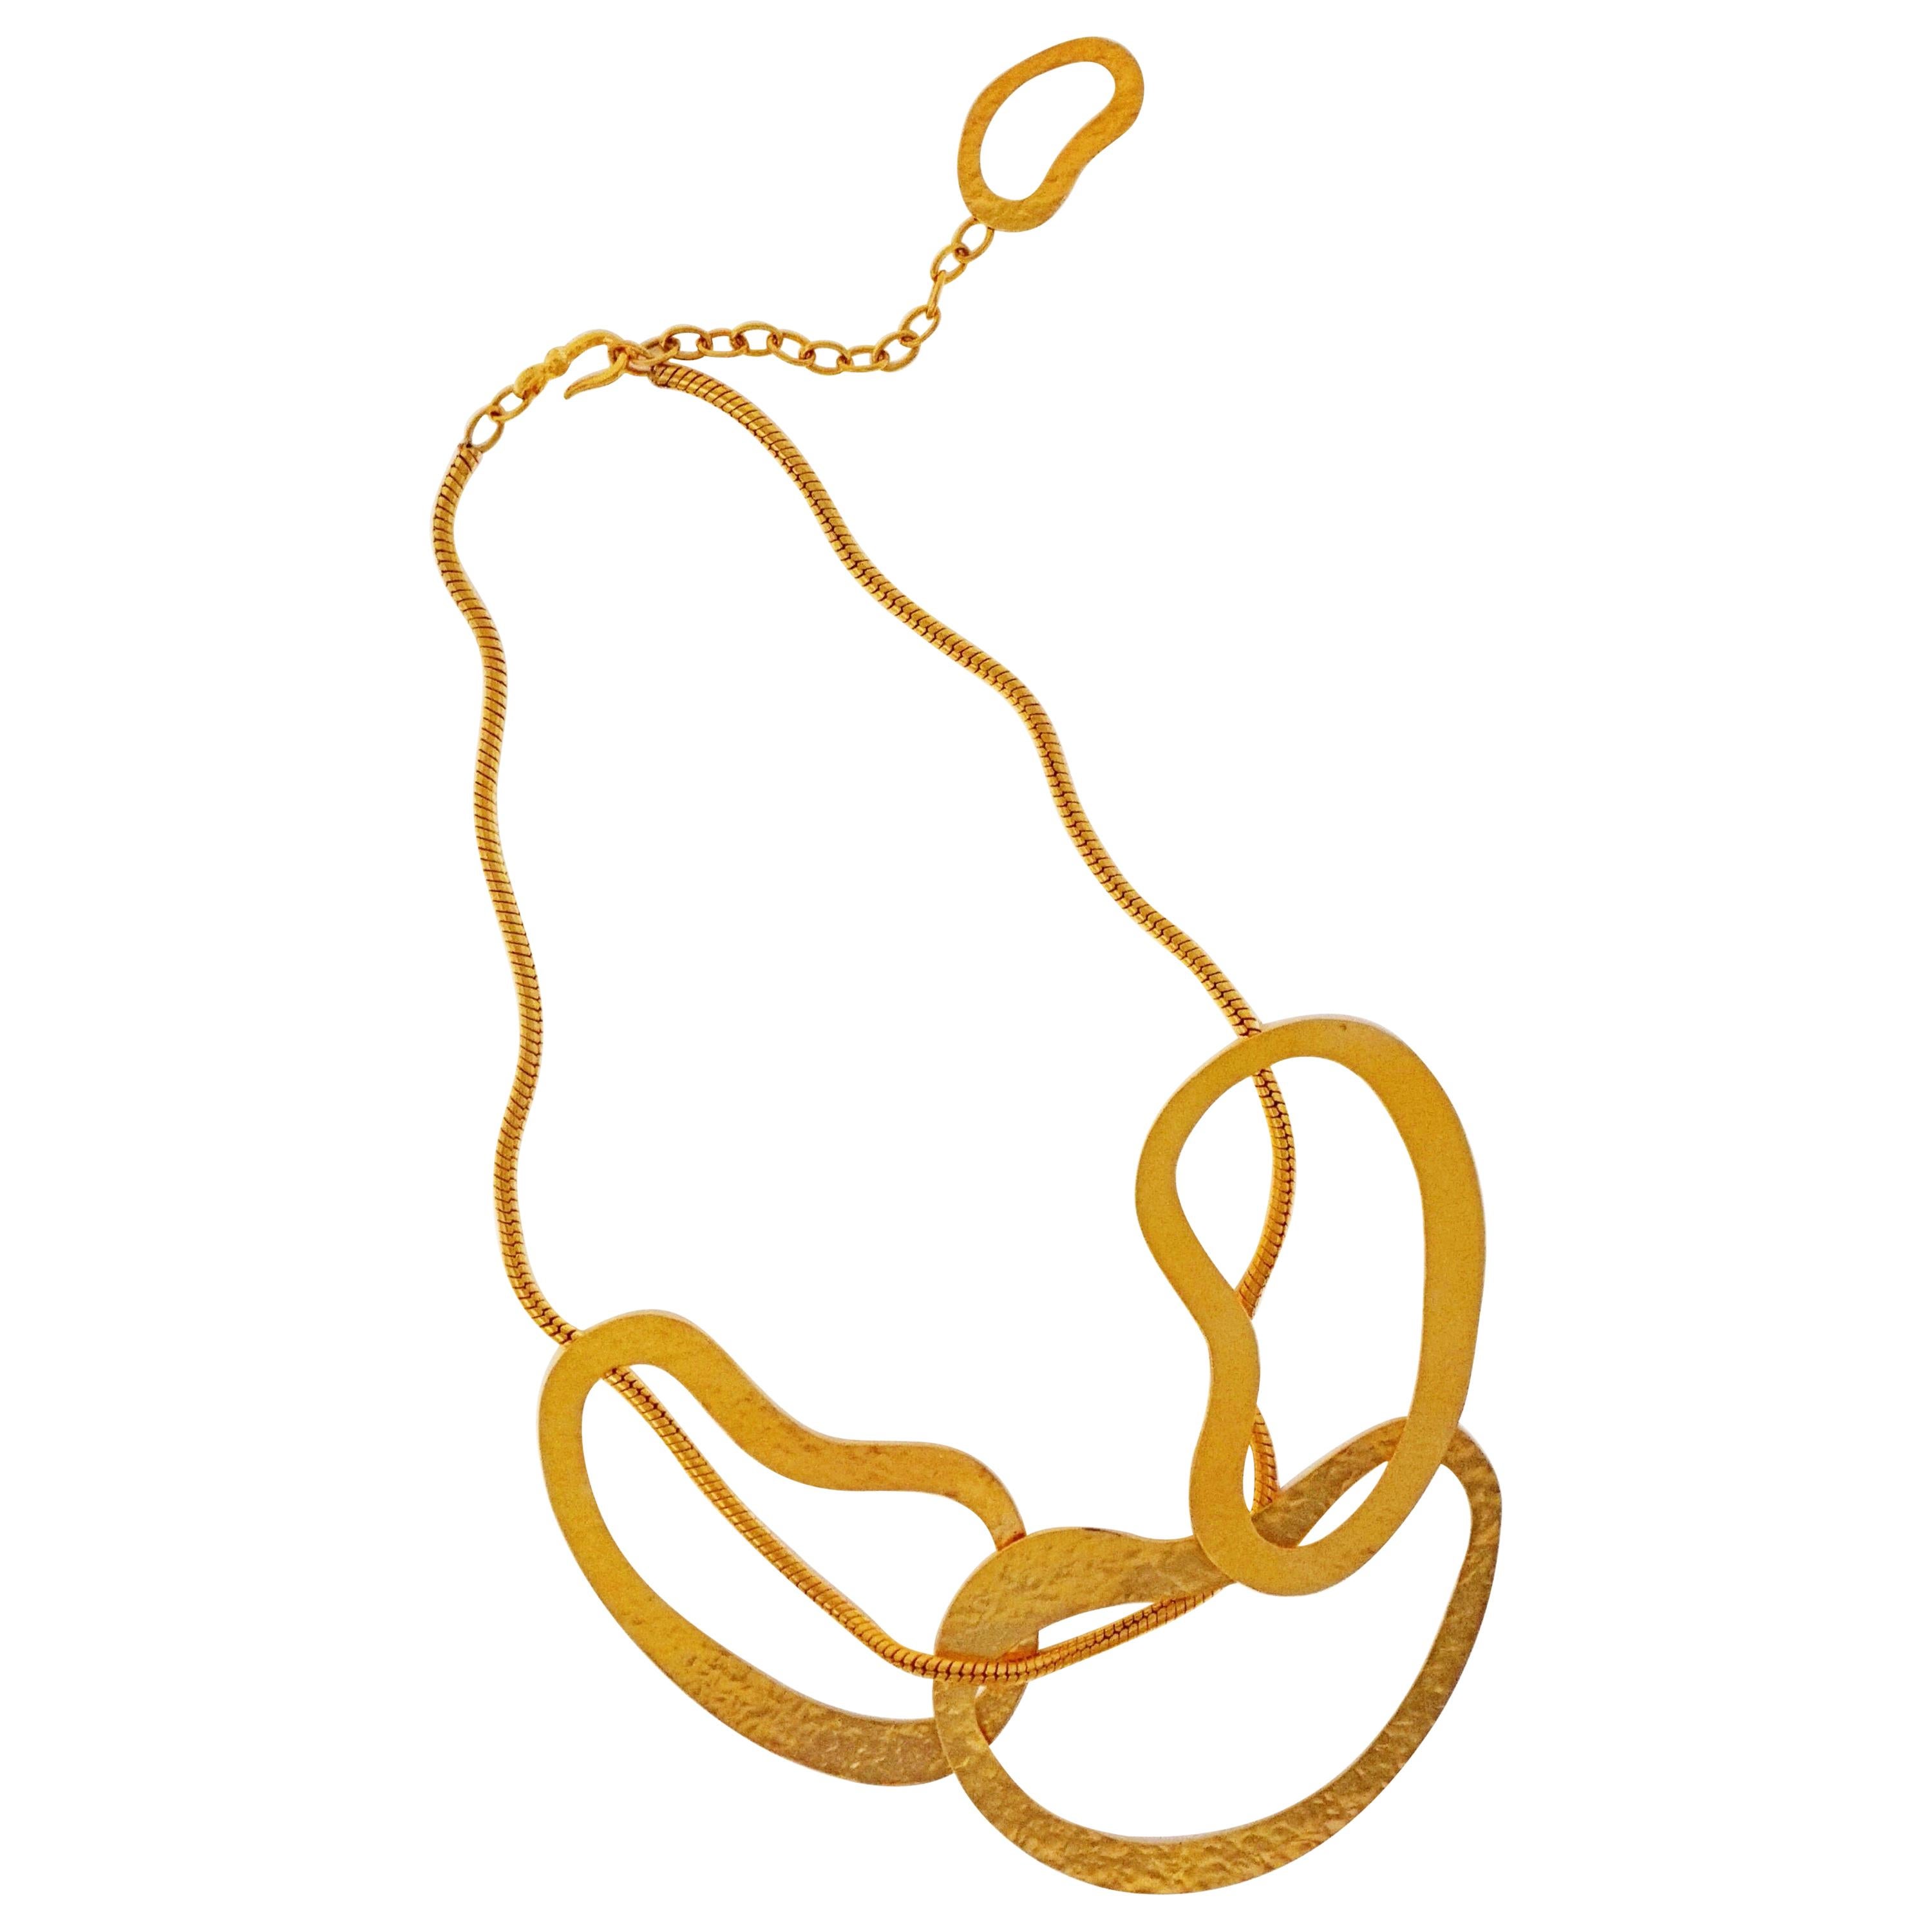 Herve van der Straeten, collier d'affirmation moderne doré « vibrations », signé en vente